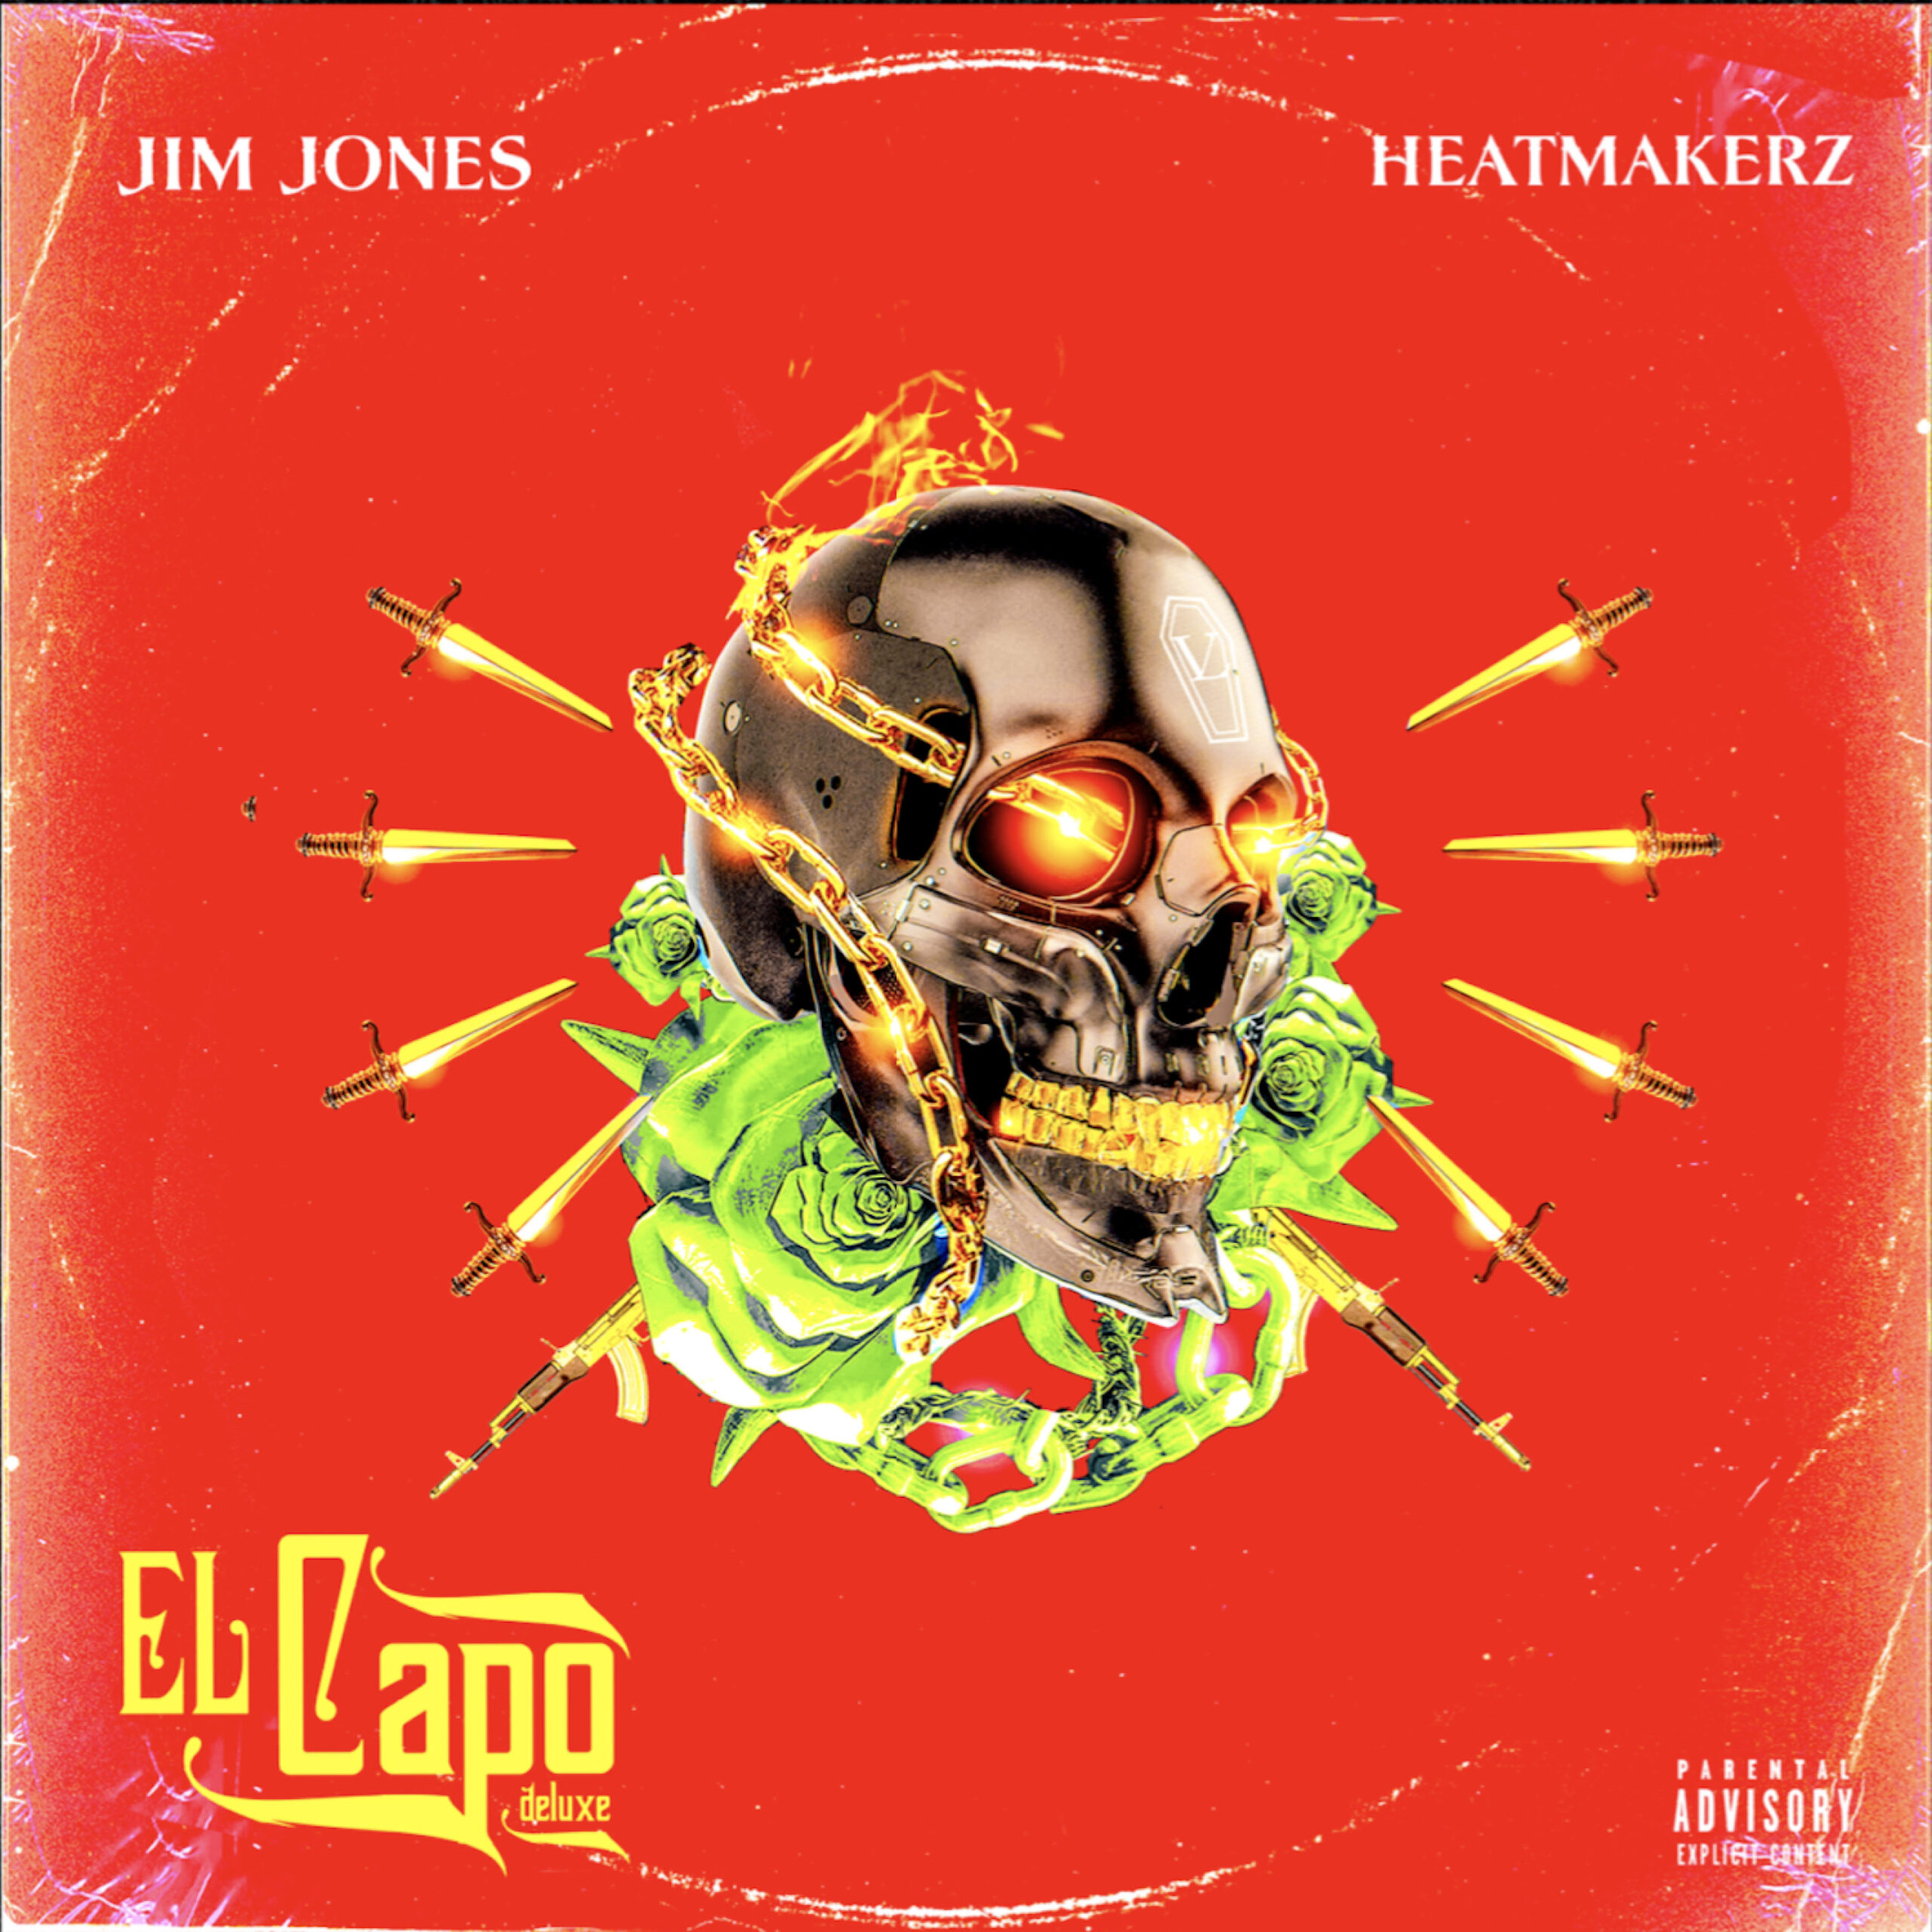 Jim Jones Releases “El Capo” Deluxe Edition Album